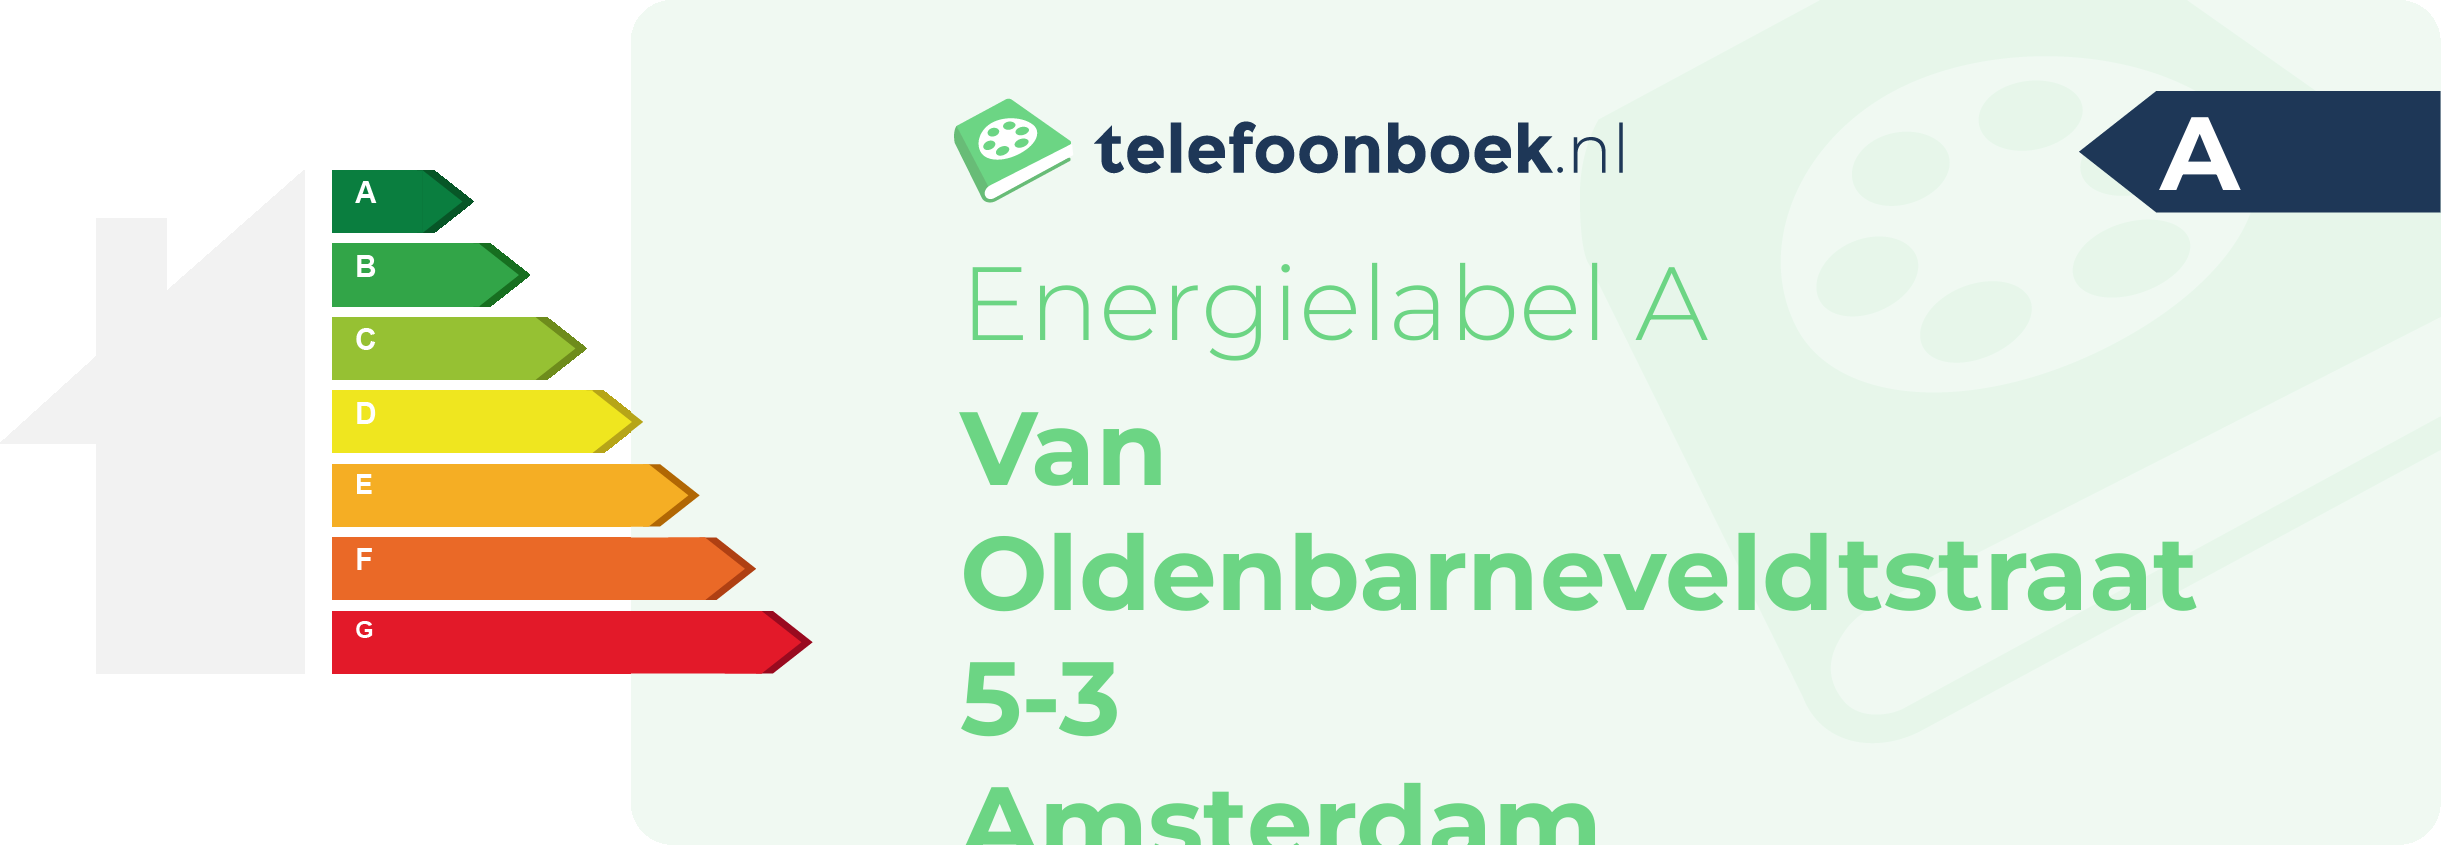 Energielabel Van Oldenbarneveldtstraat 5-3 Amsterdam